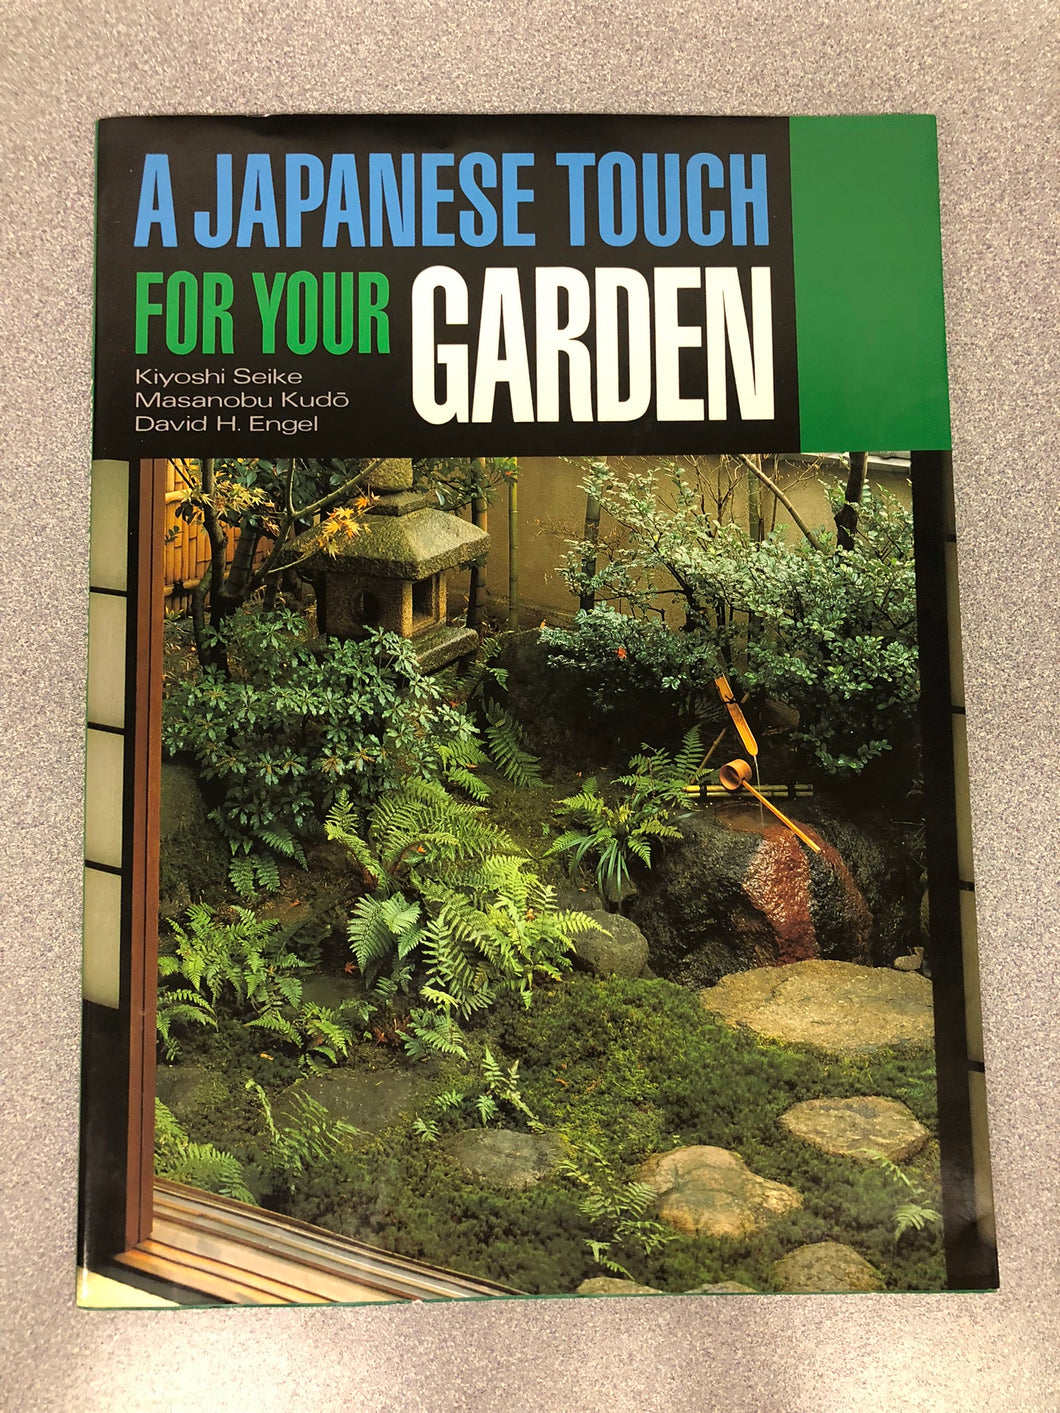 A Japanese Touch for Your Garden, Seike, Kiyoshi, et al, [1980] G 8/22